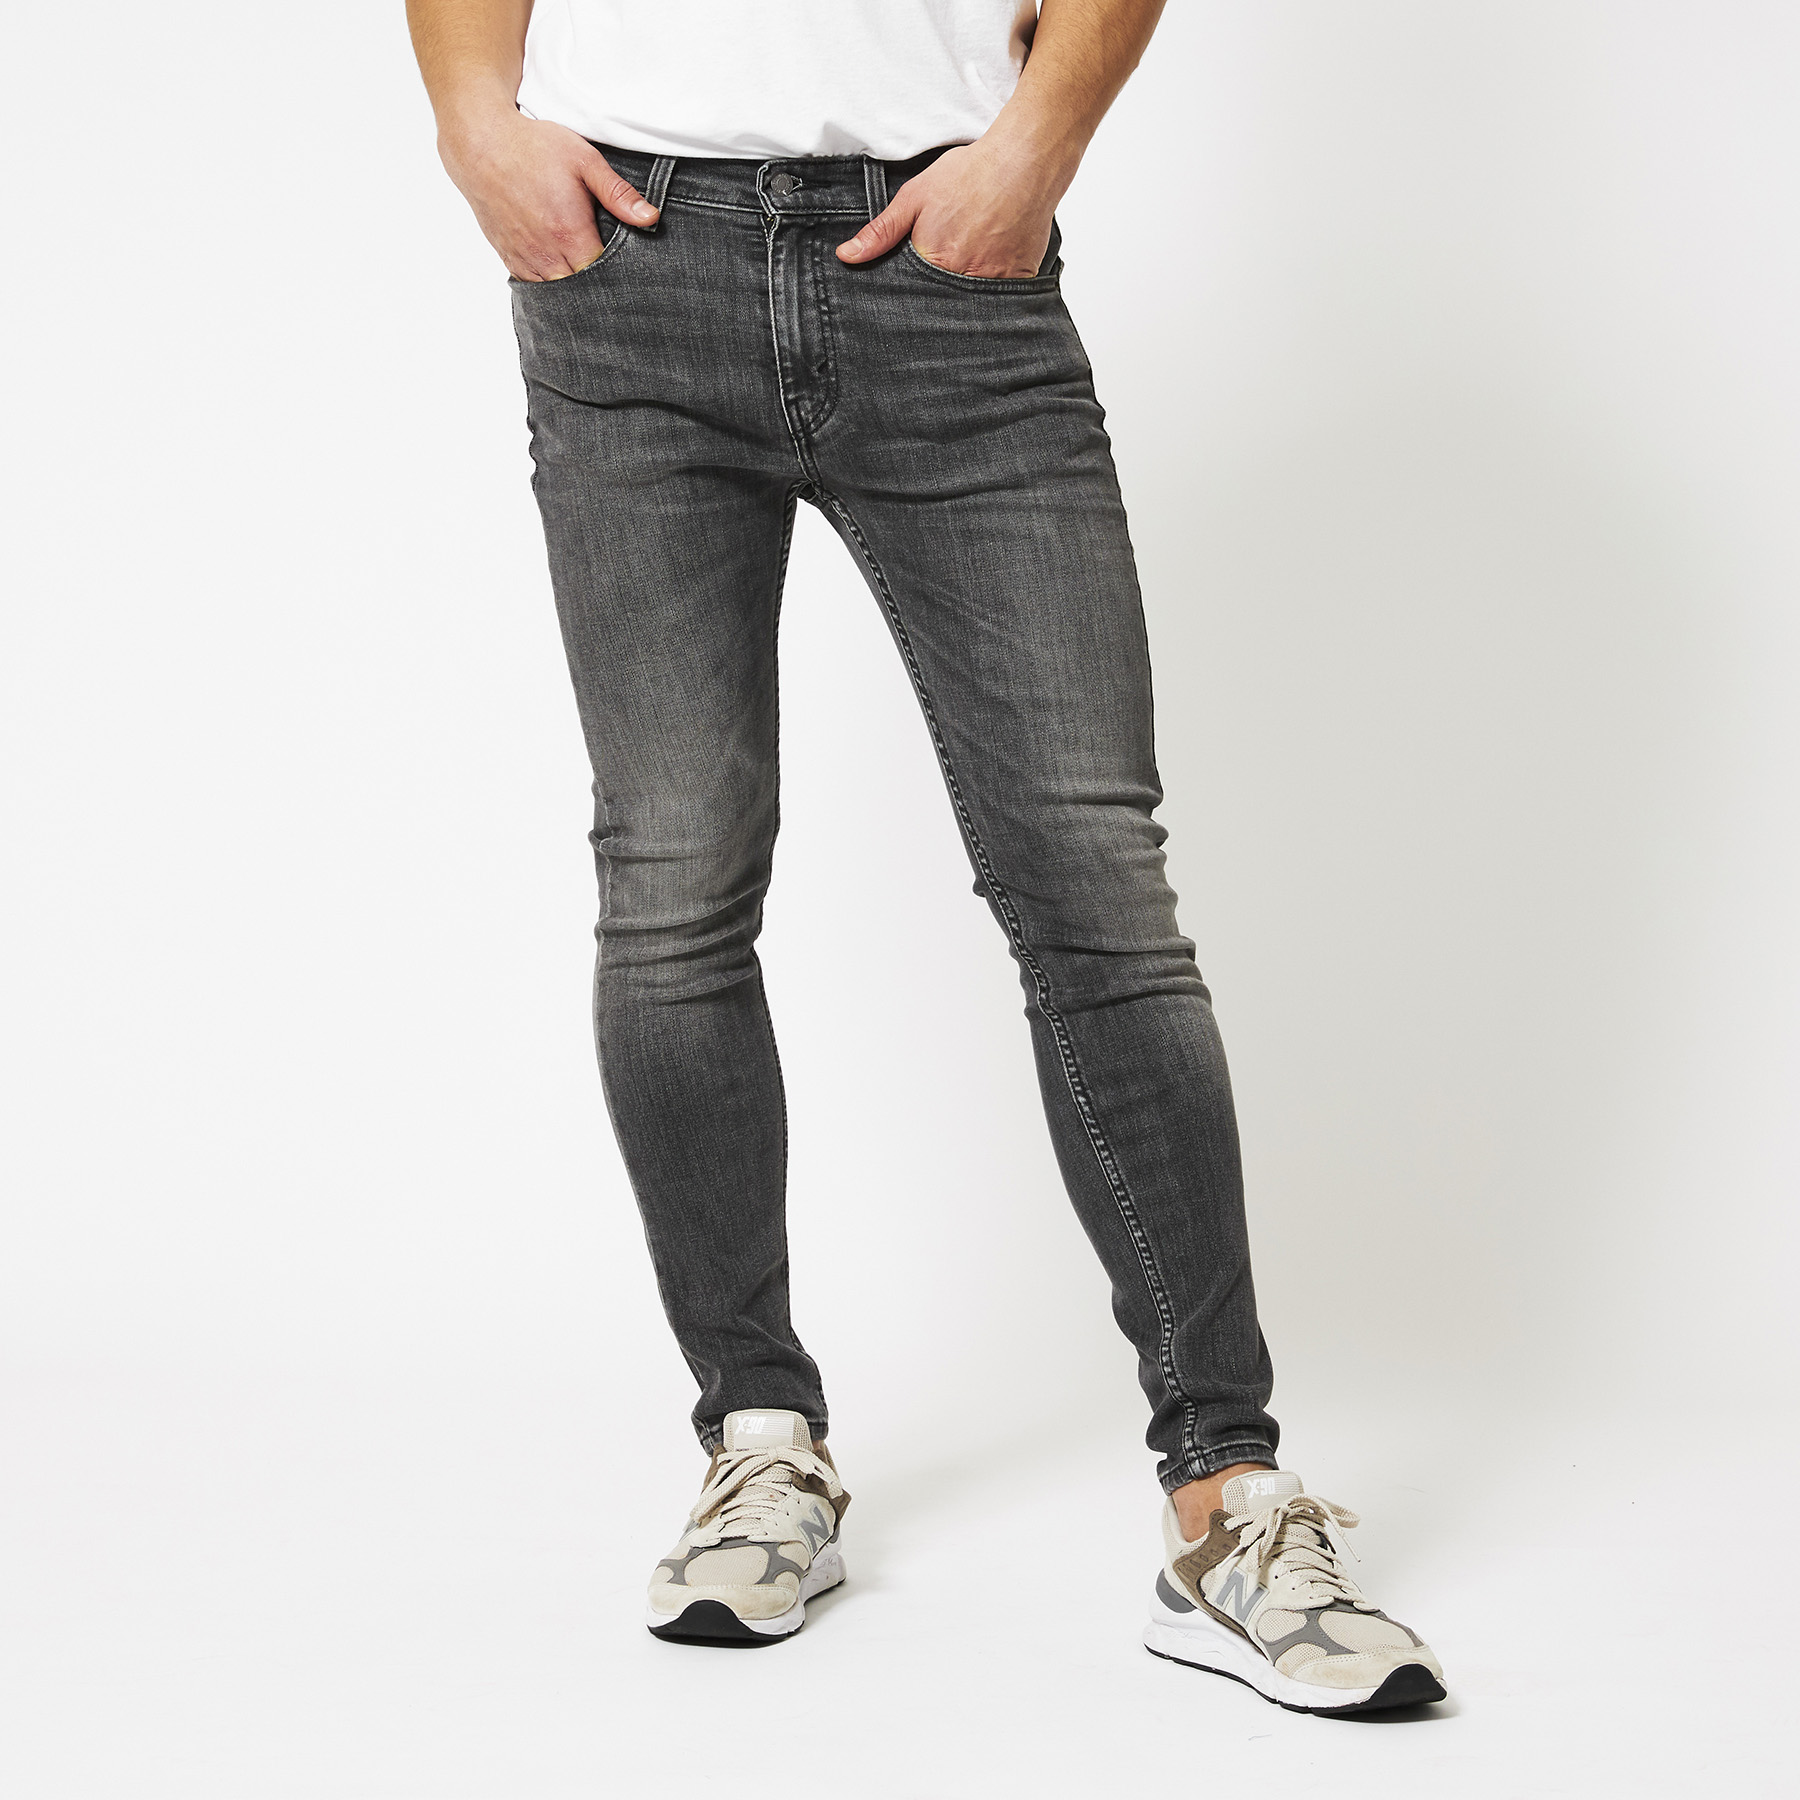 519 skinny jeans